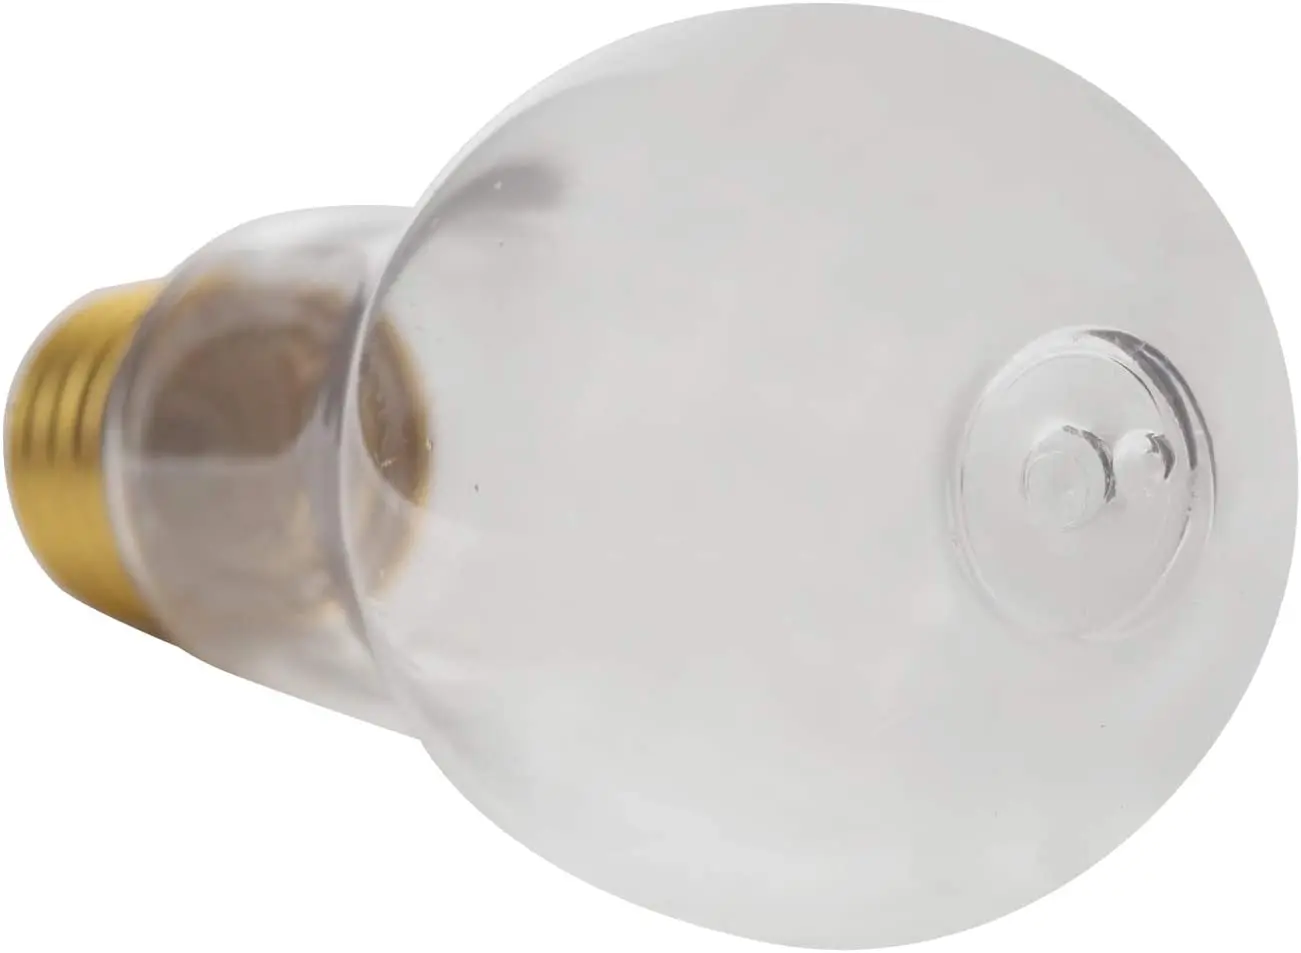 lâmpada de doce recipiente de lâmpada de luz falsa jarra de fundo plano para ornamentos de copos de presente